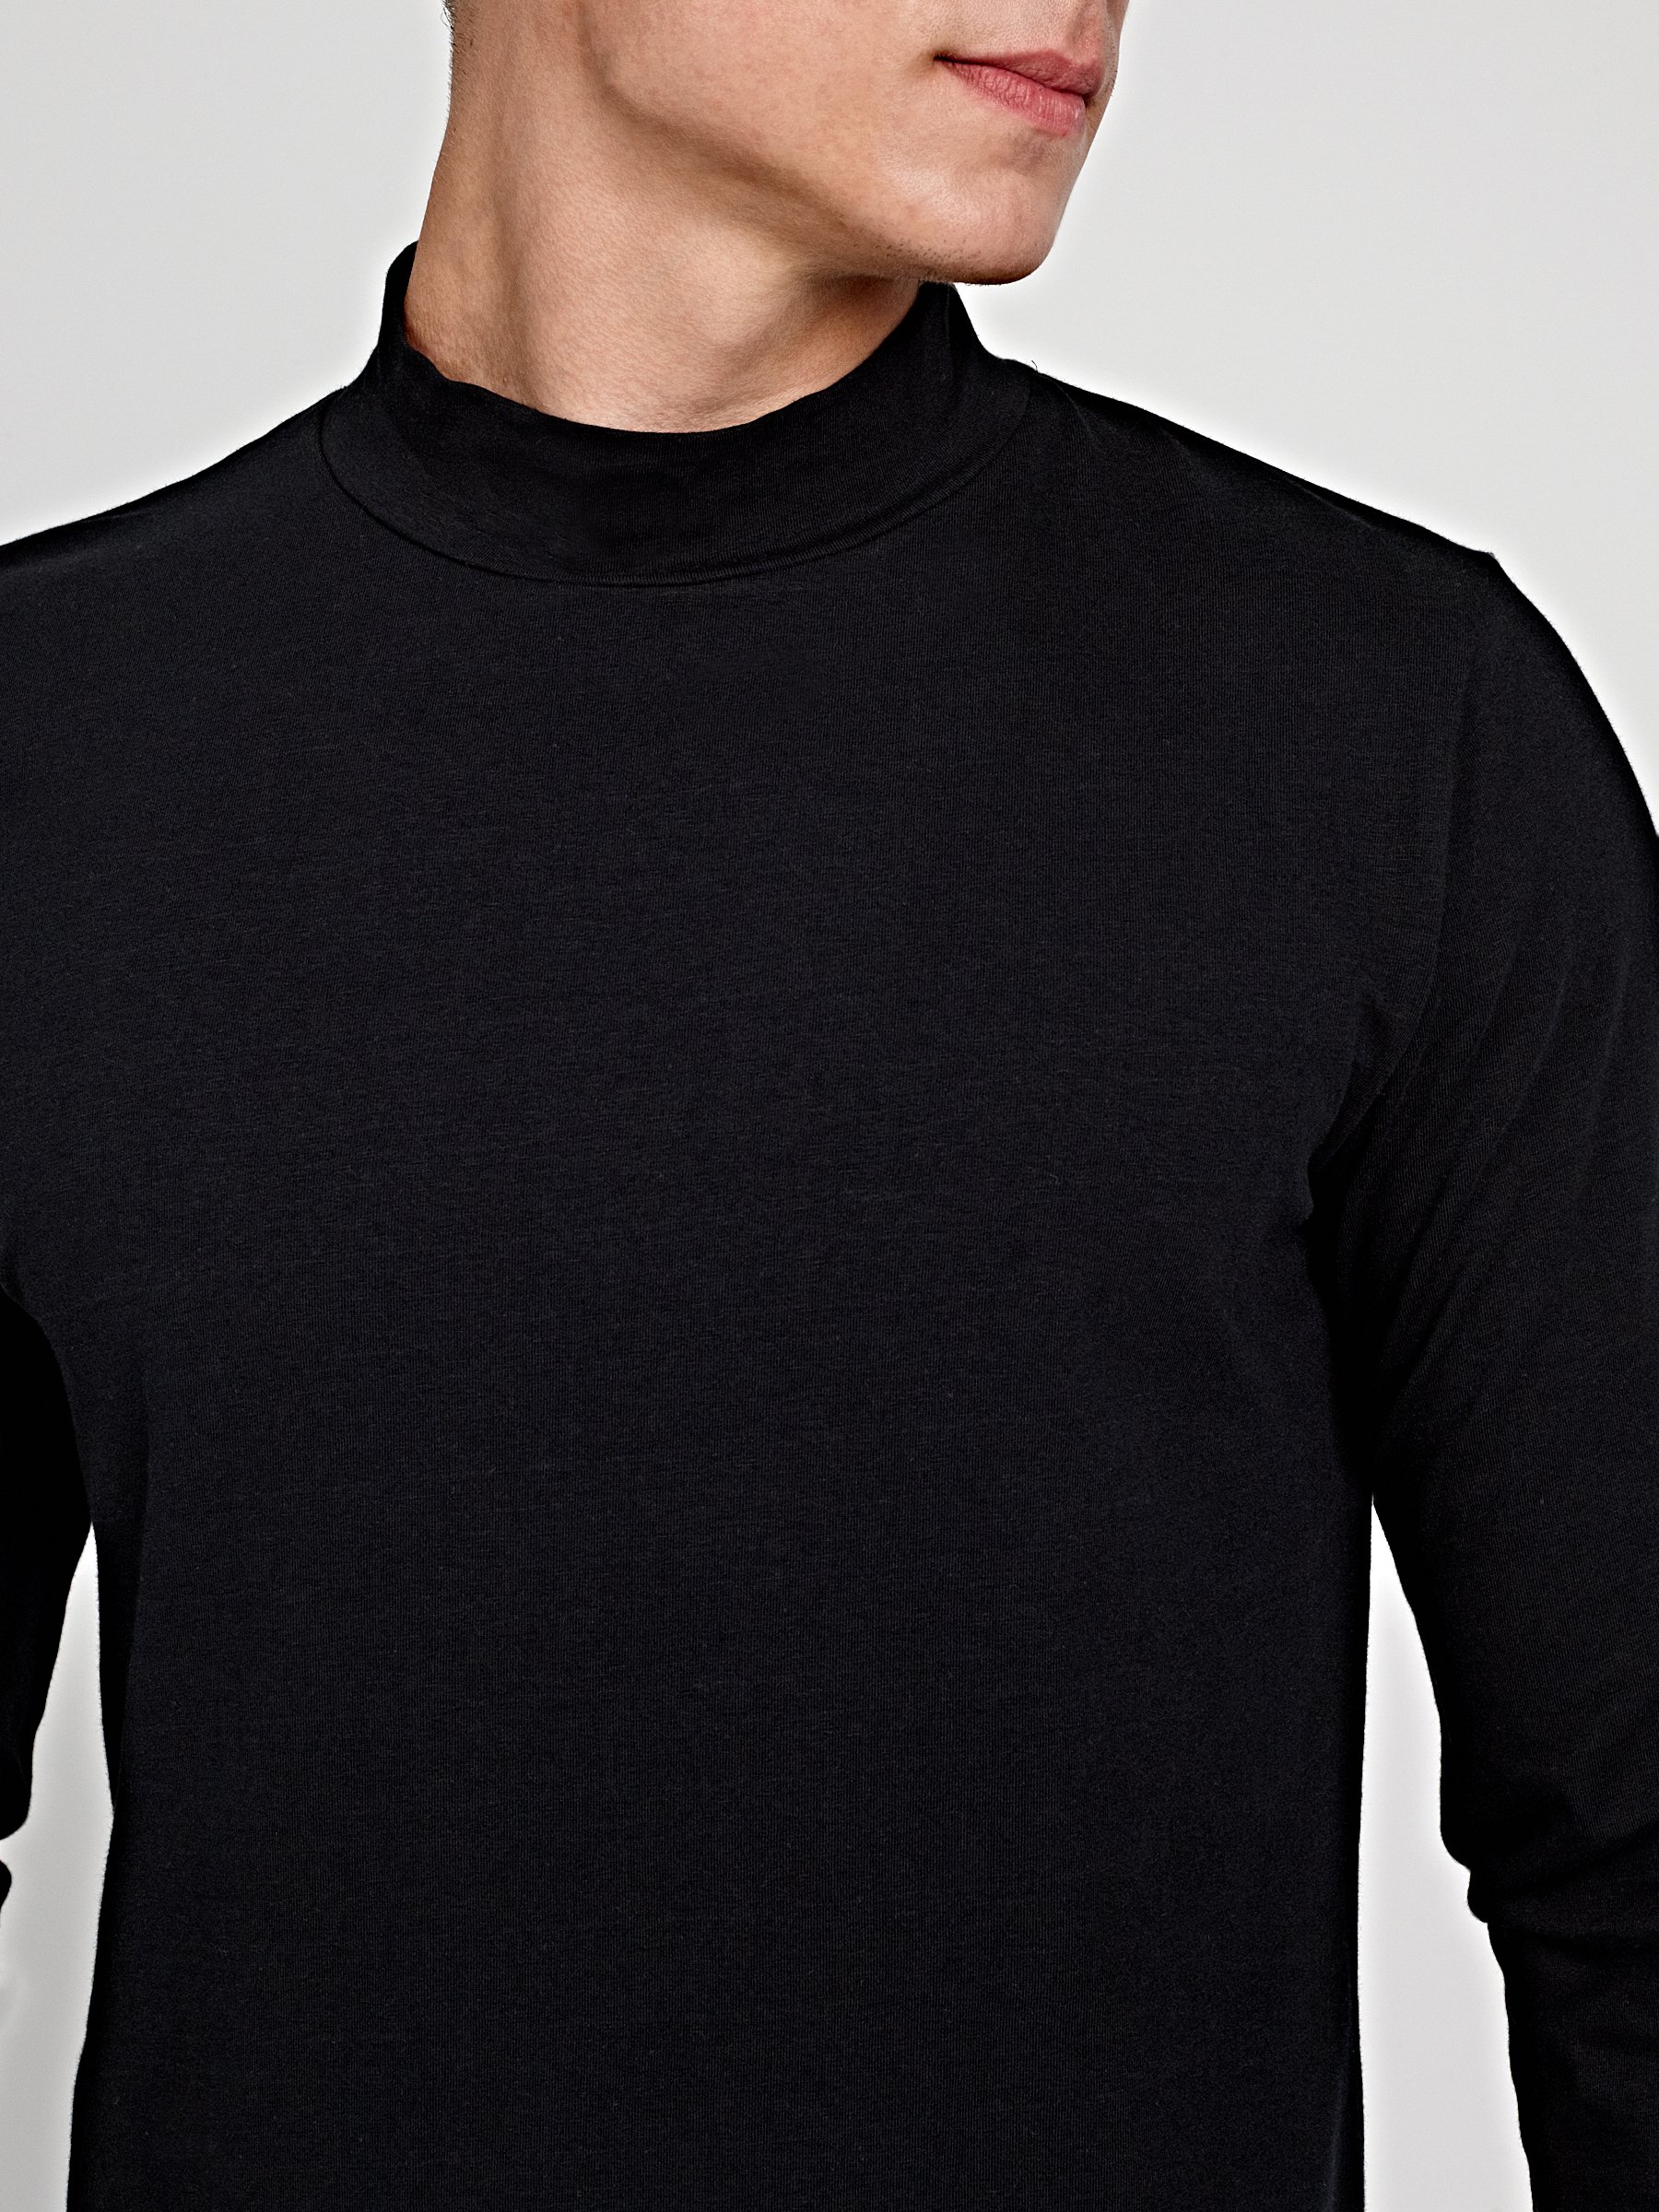 Mens Clothing T-shirts Long-sleeve t-shirts Rhude Porceline T-shirt in Black for Men 